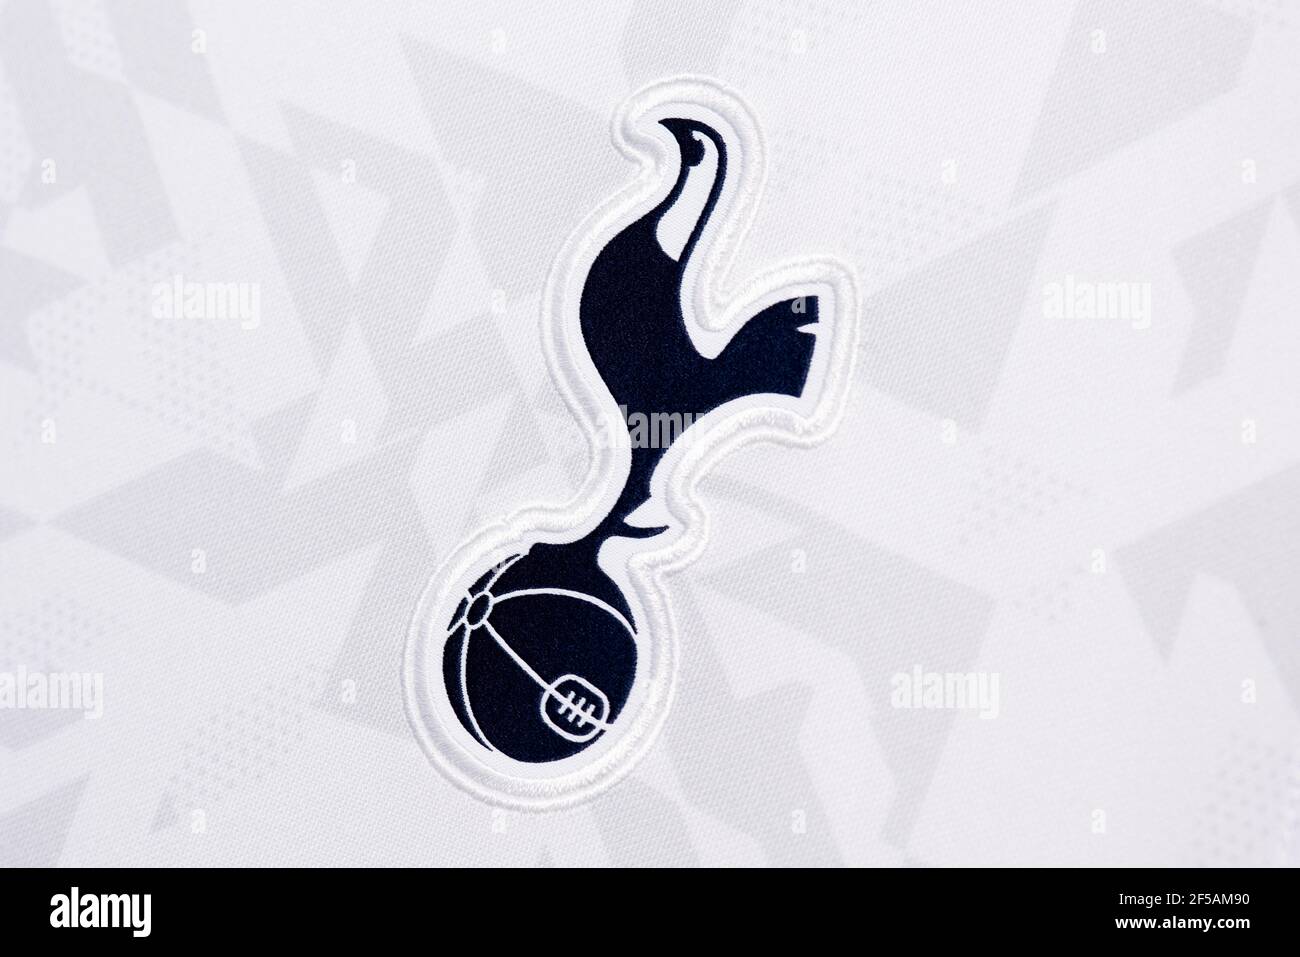 Close up of Tottenham Hotspur FC jersey Stock Photo